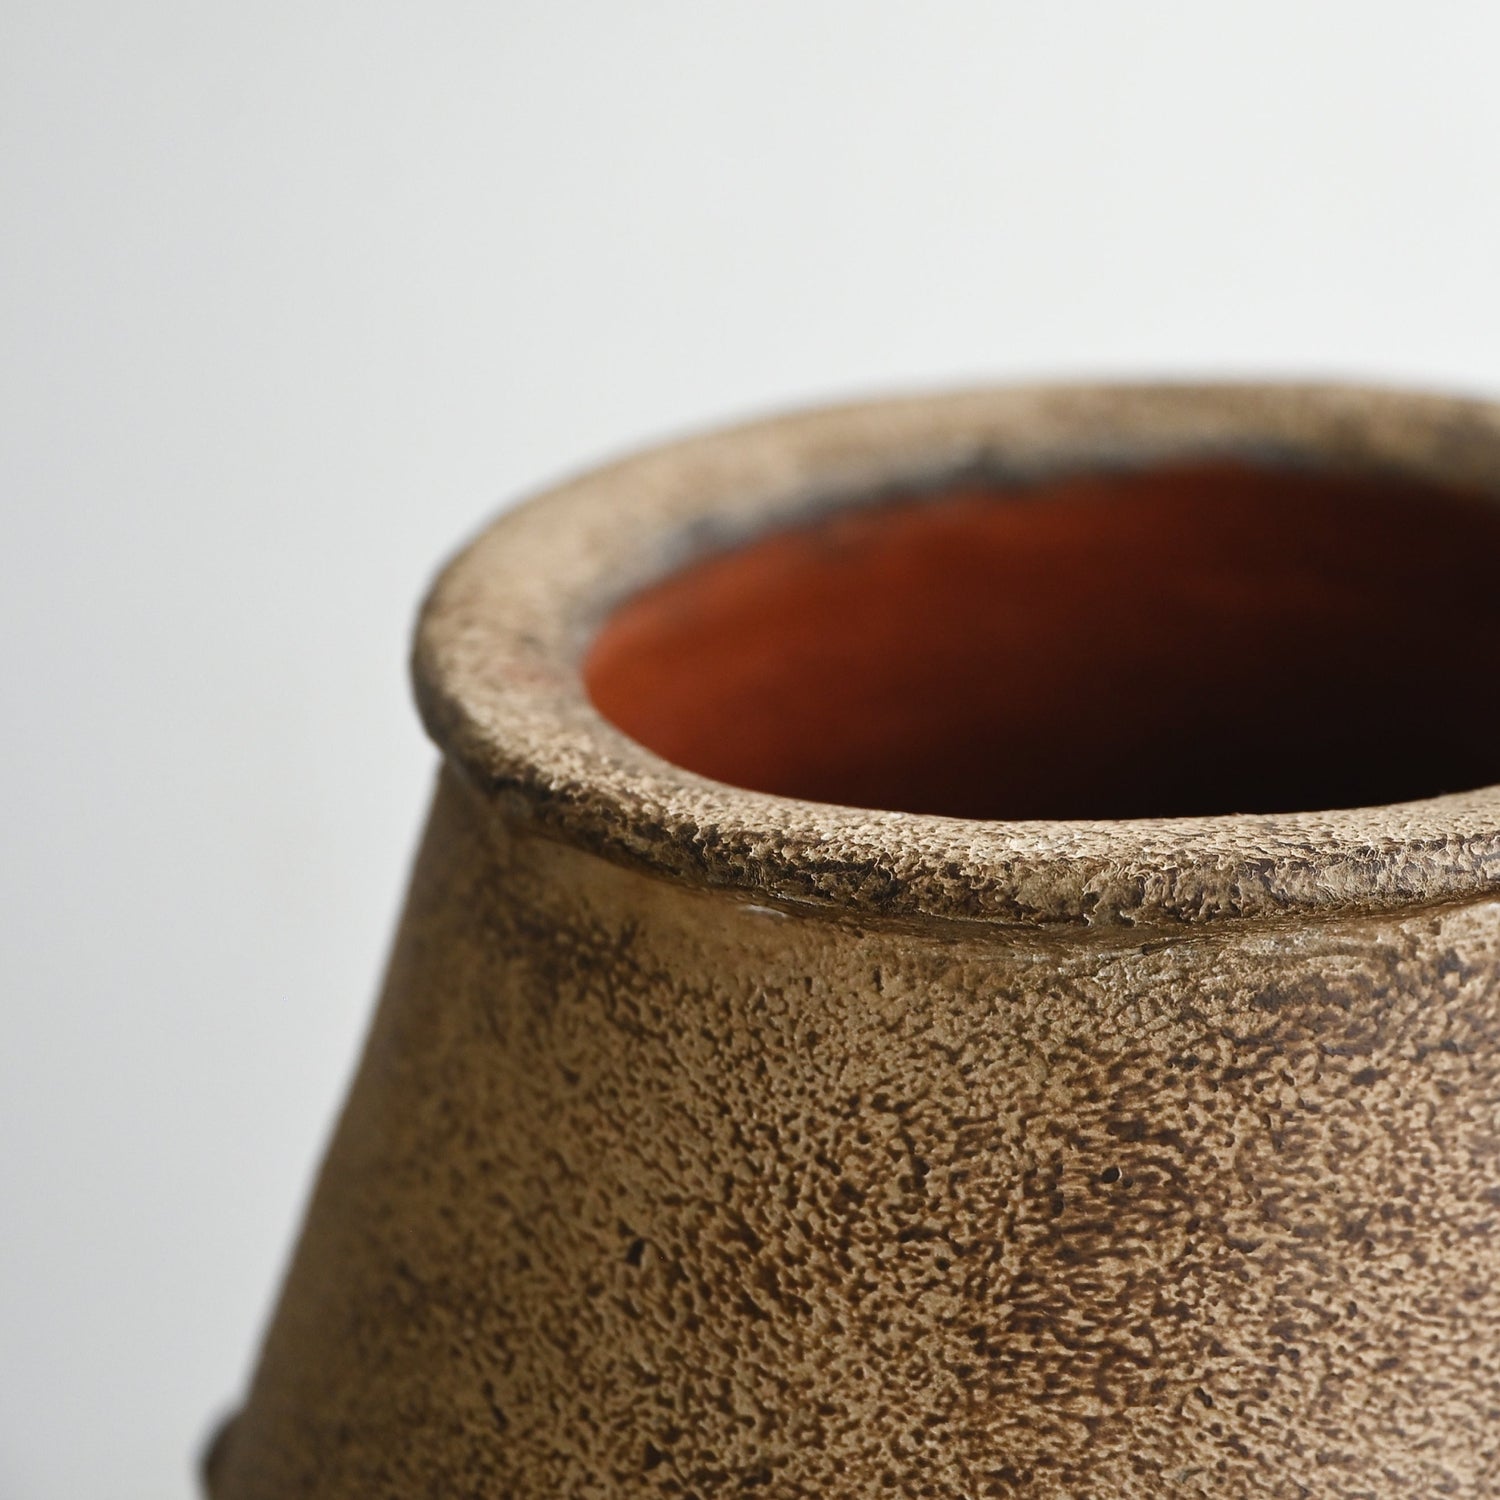 Sanur Pottery Vase